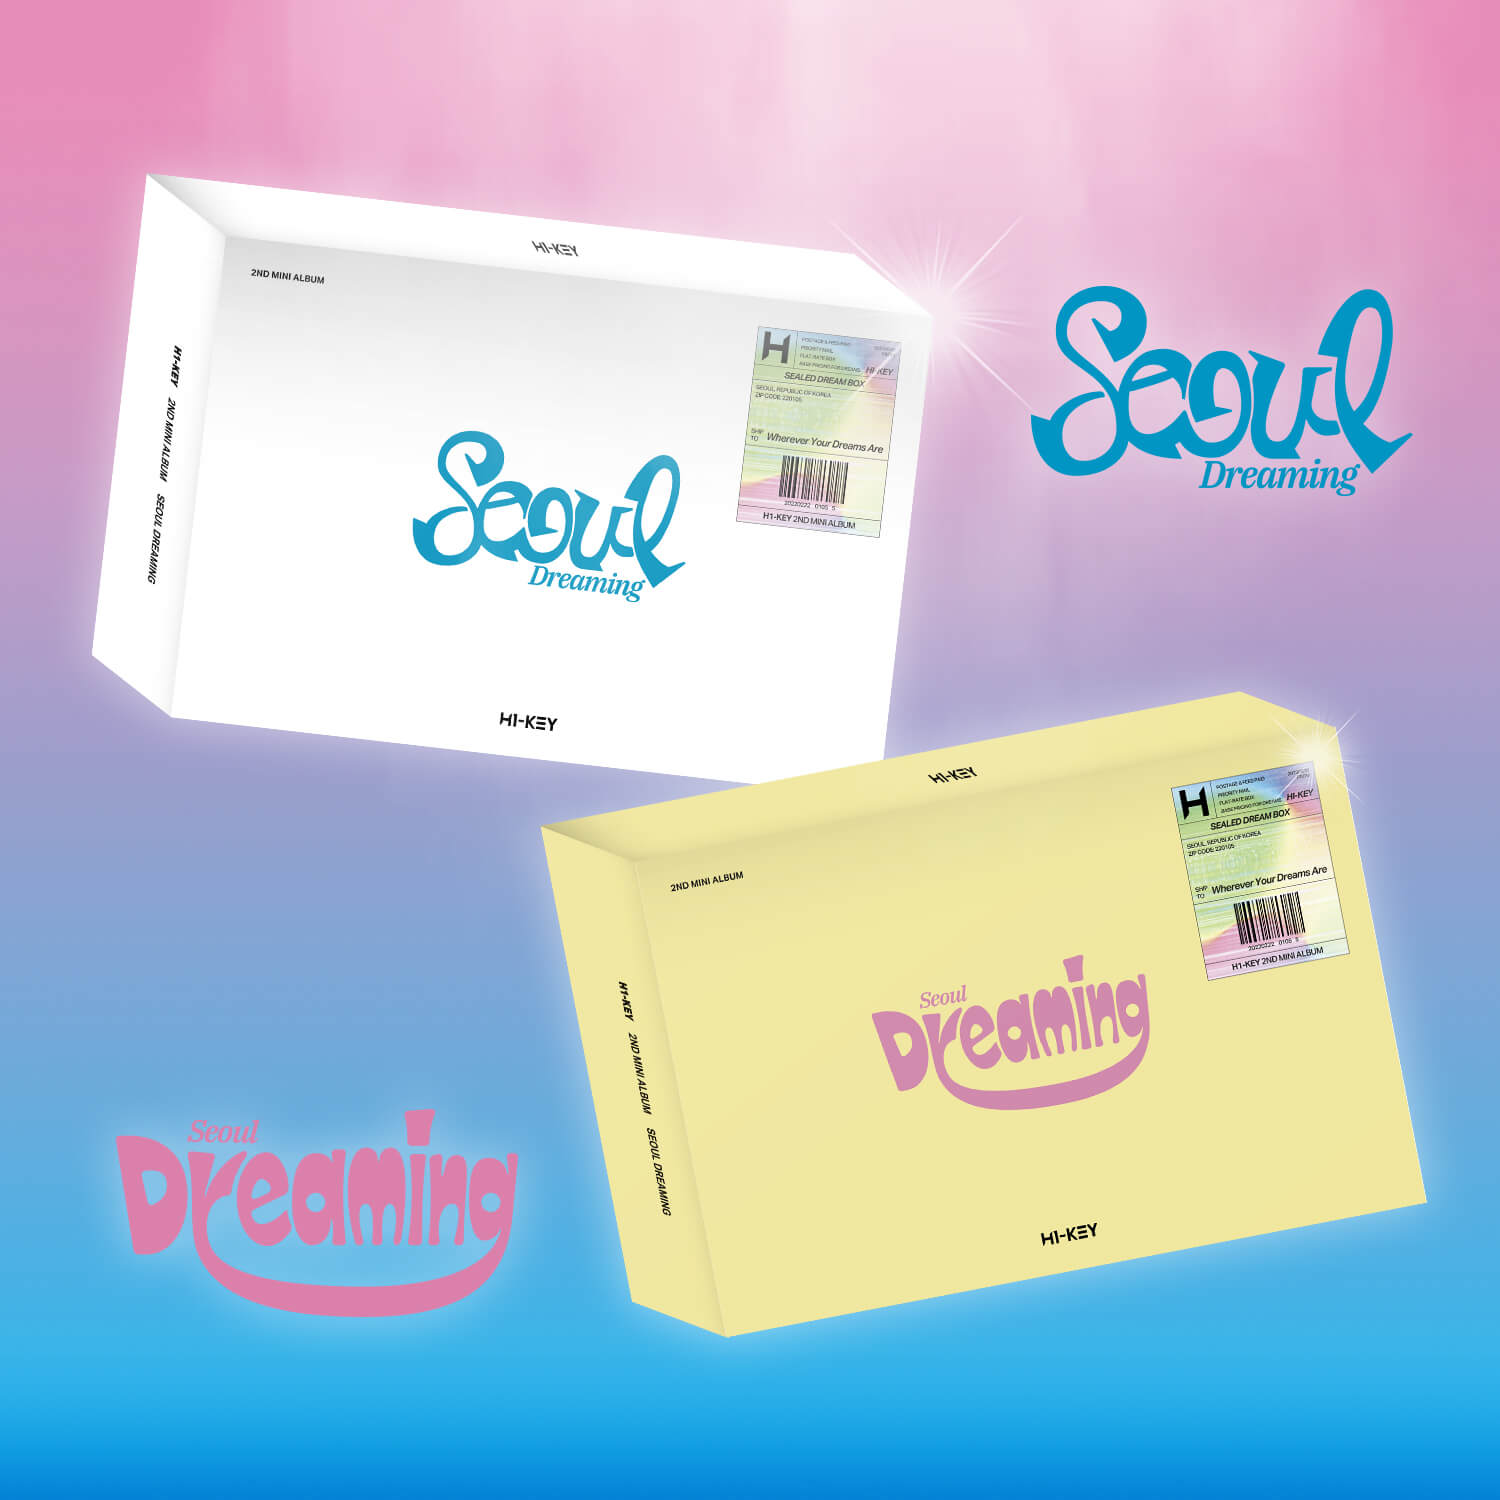 H1-KEY 2nd Mini Album Seoul Dreaming - Seoul / Dreaming Version